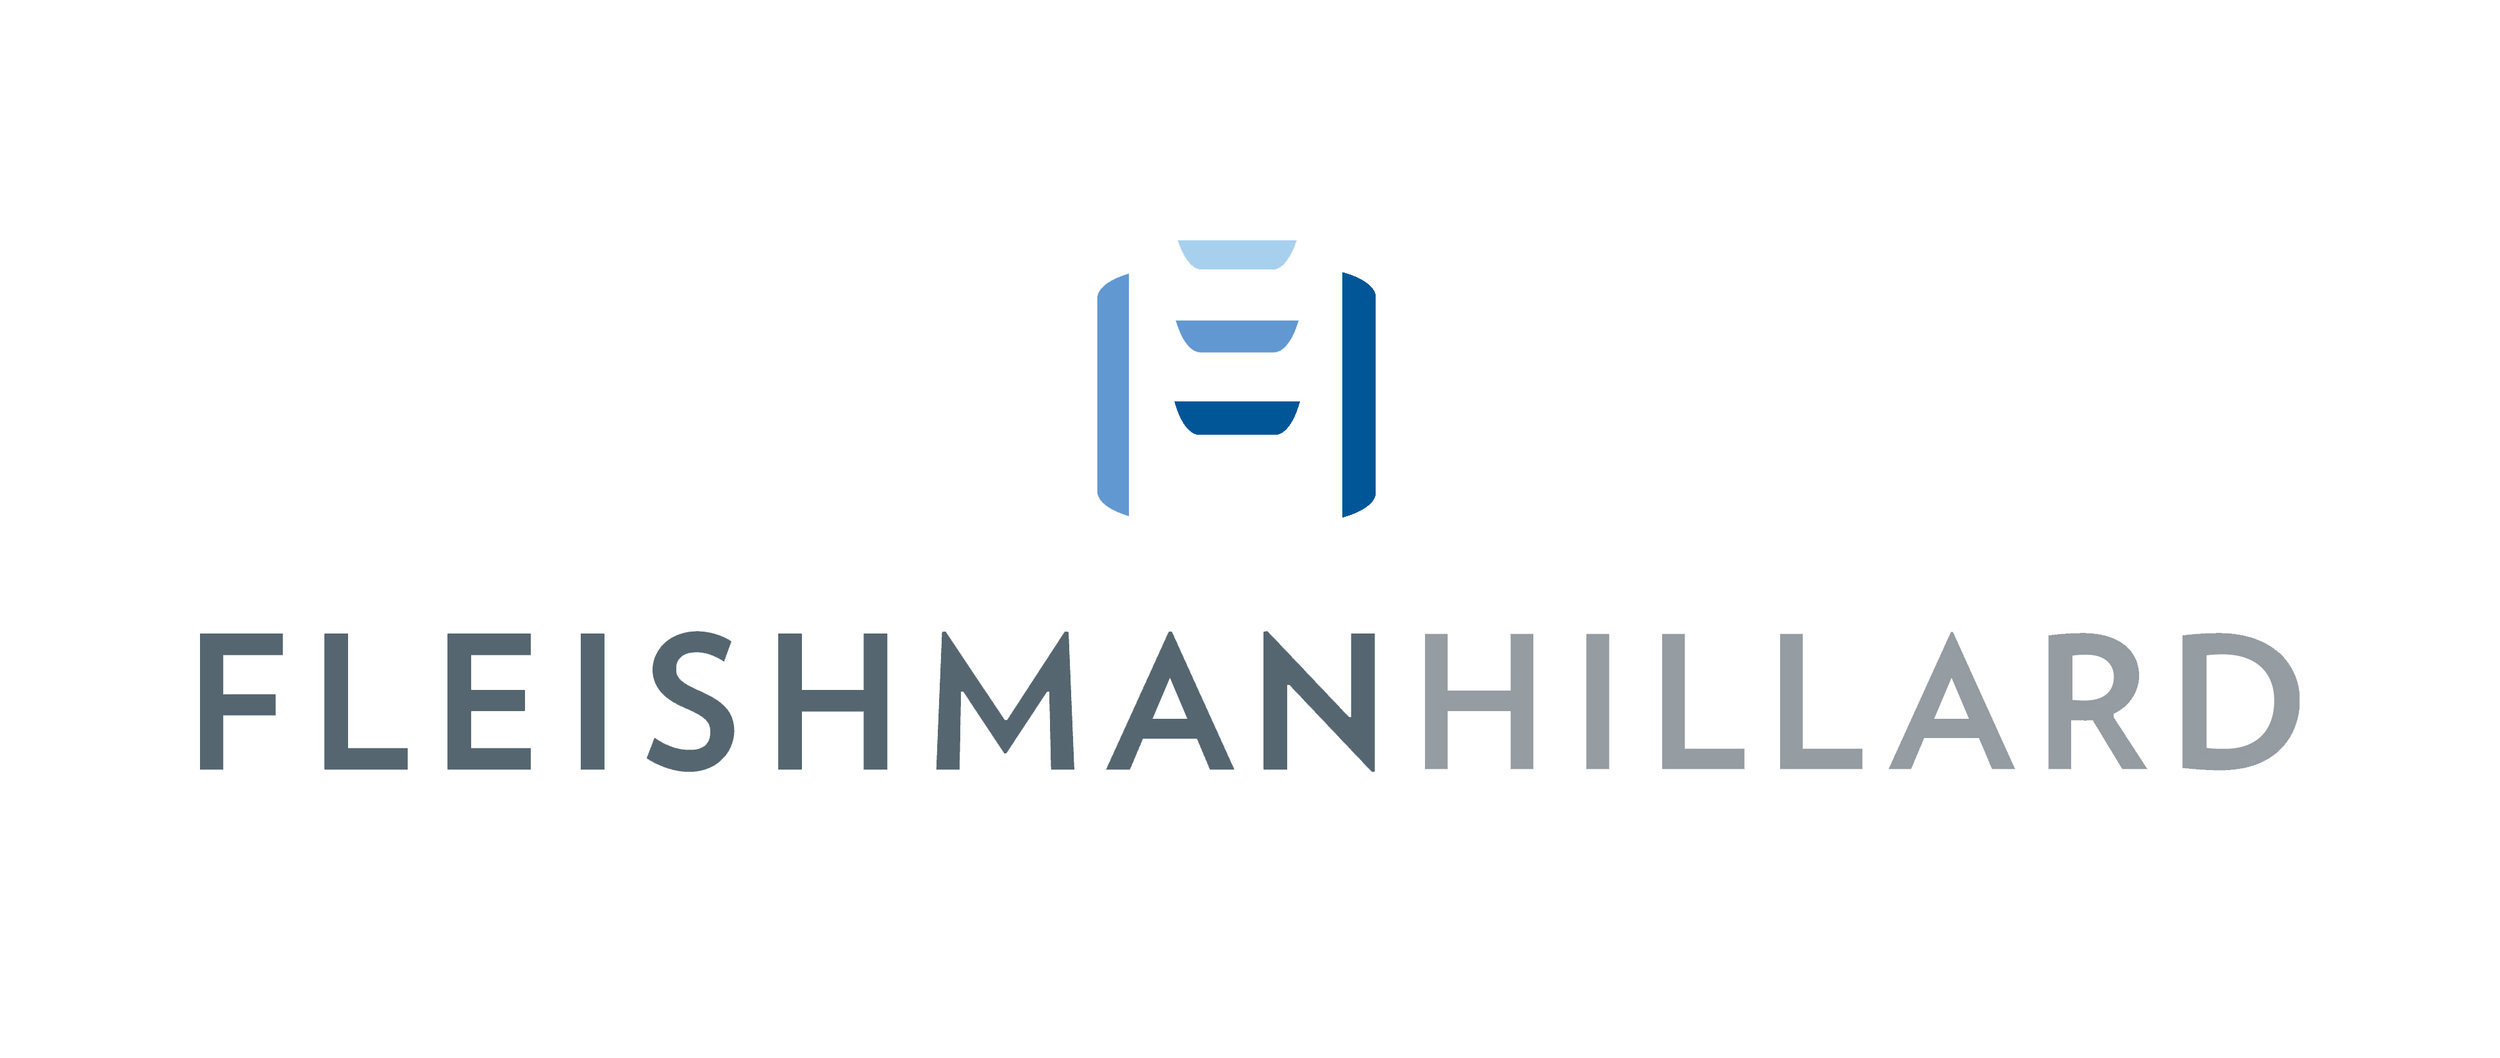 FleishmanHillard_logo_4c.jpg